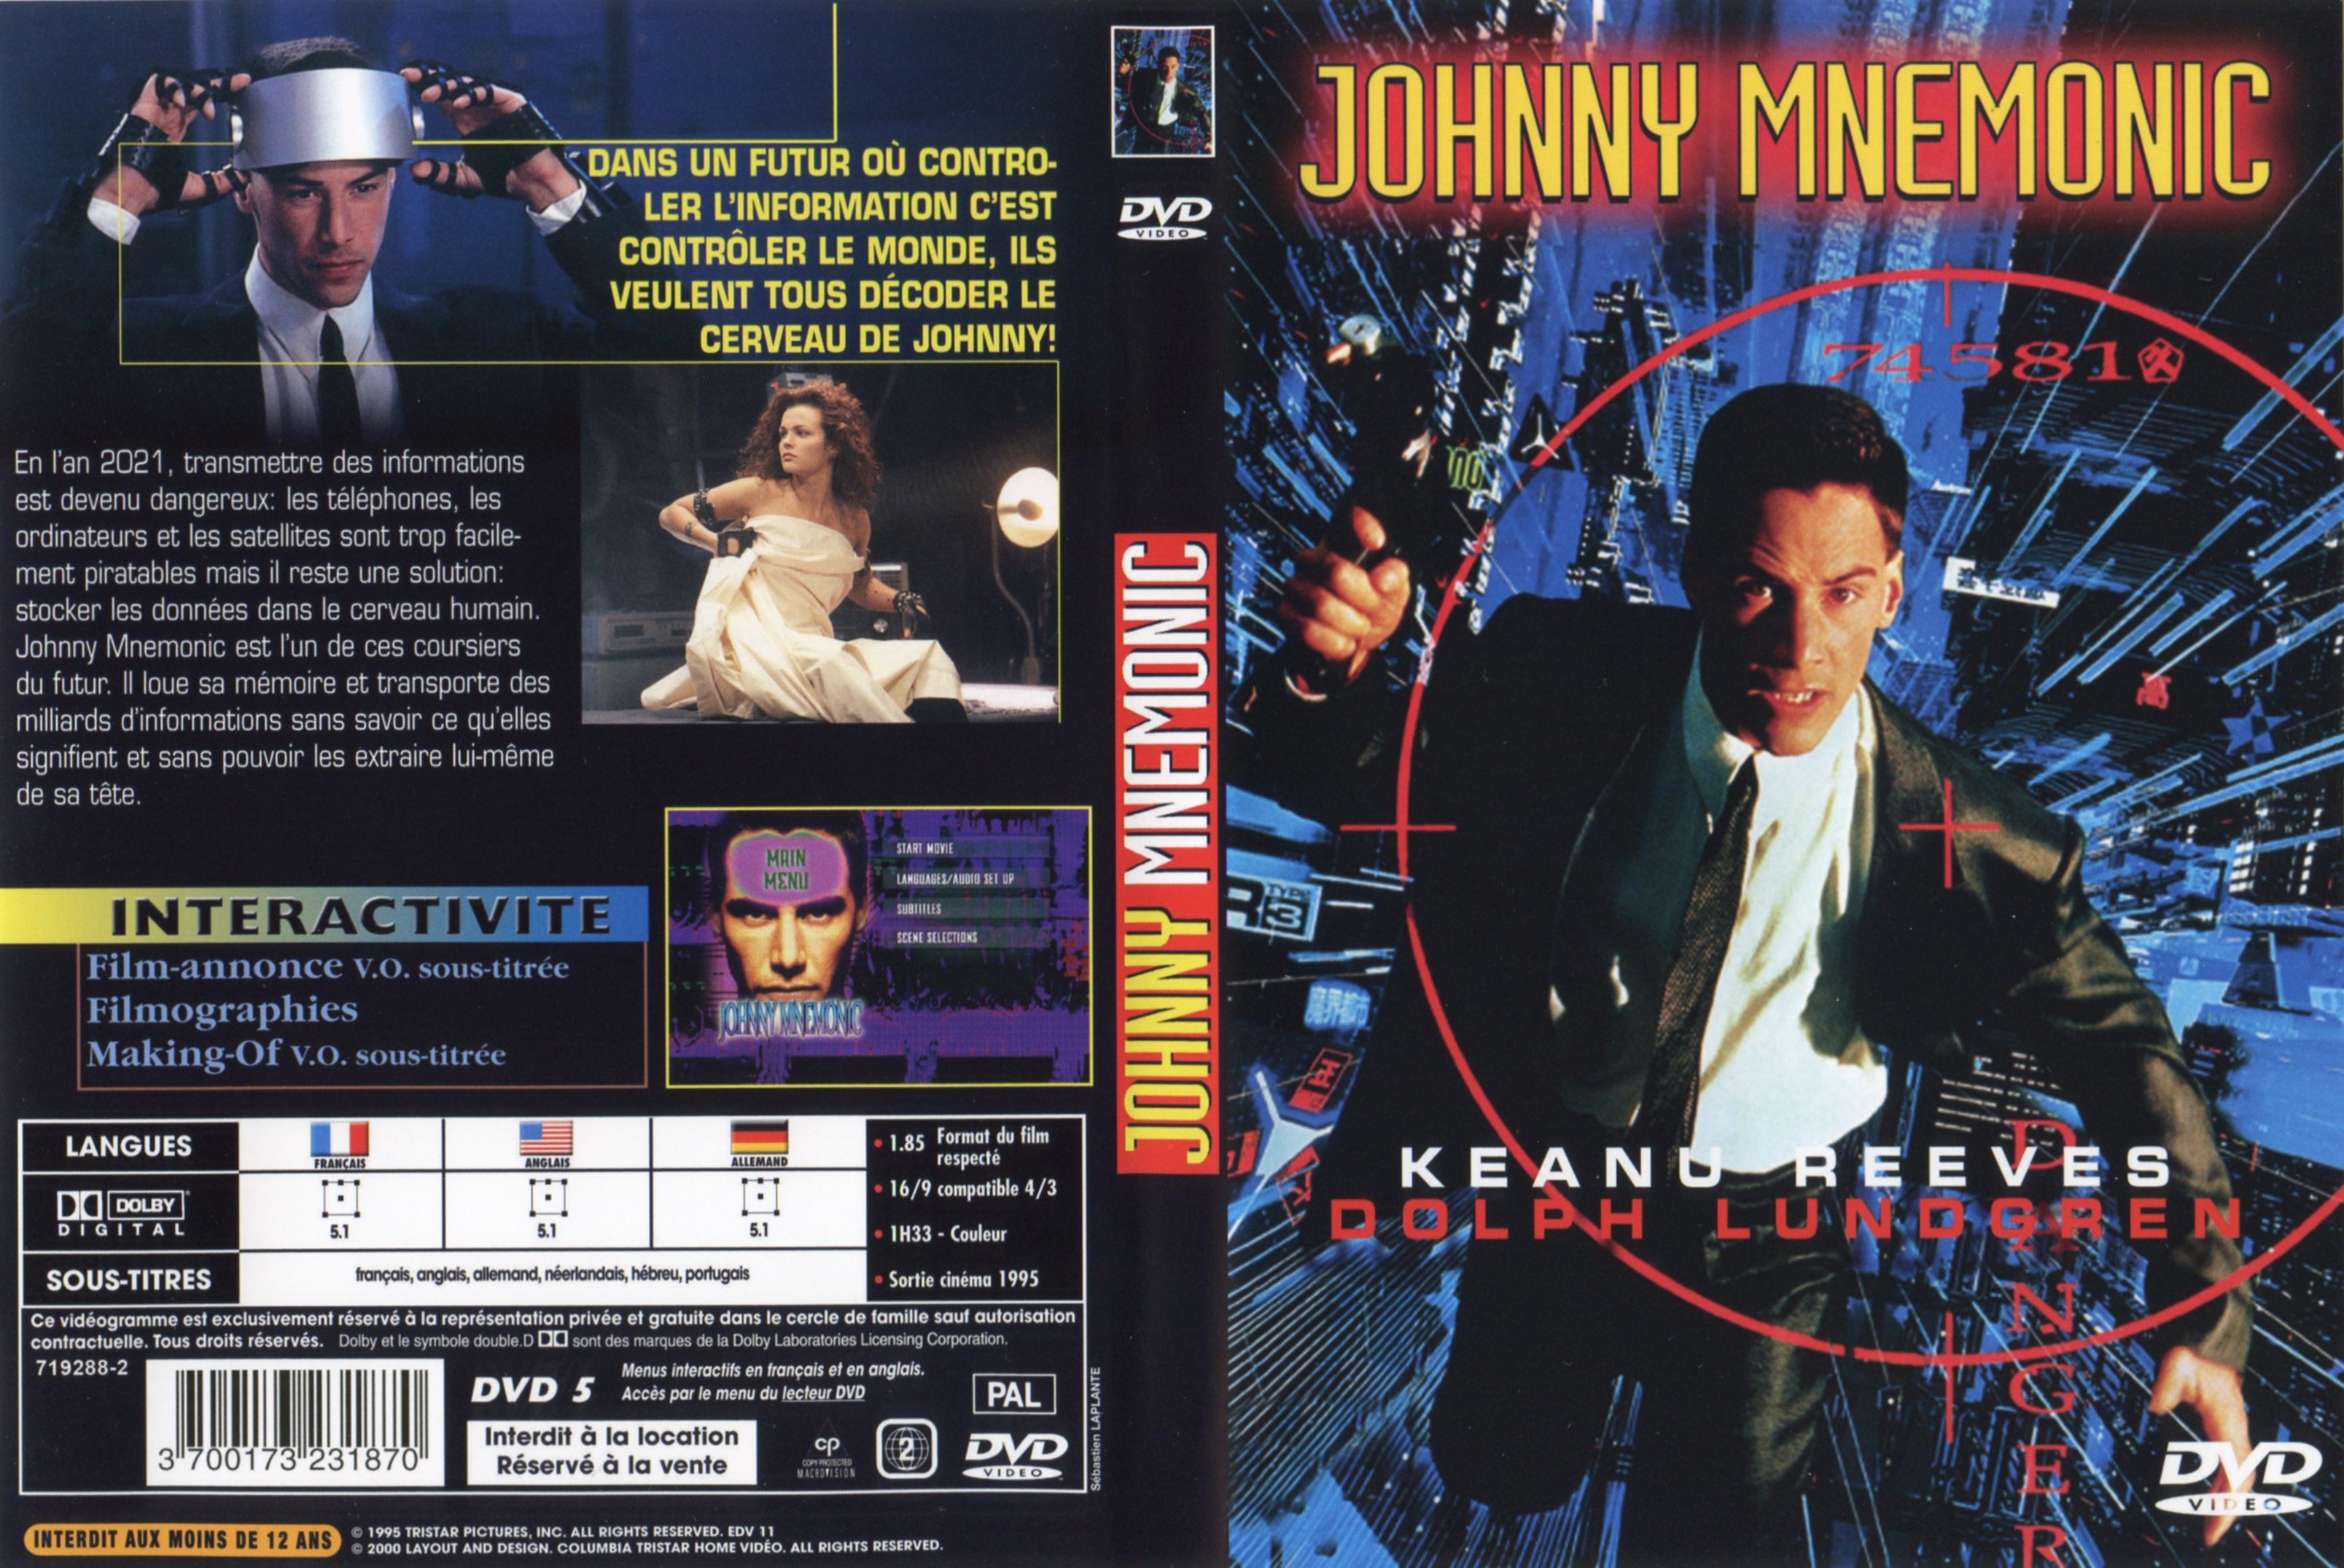 Jaquette DVD Johnny Mnemonic v3